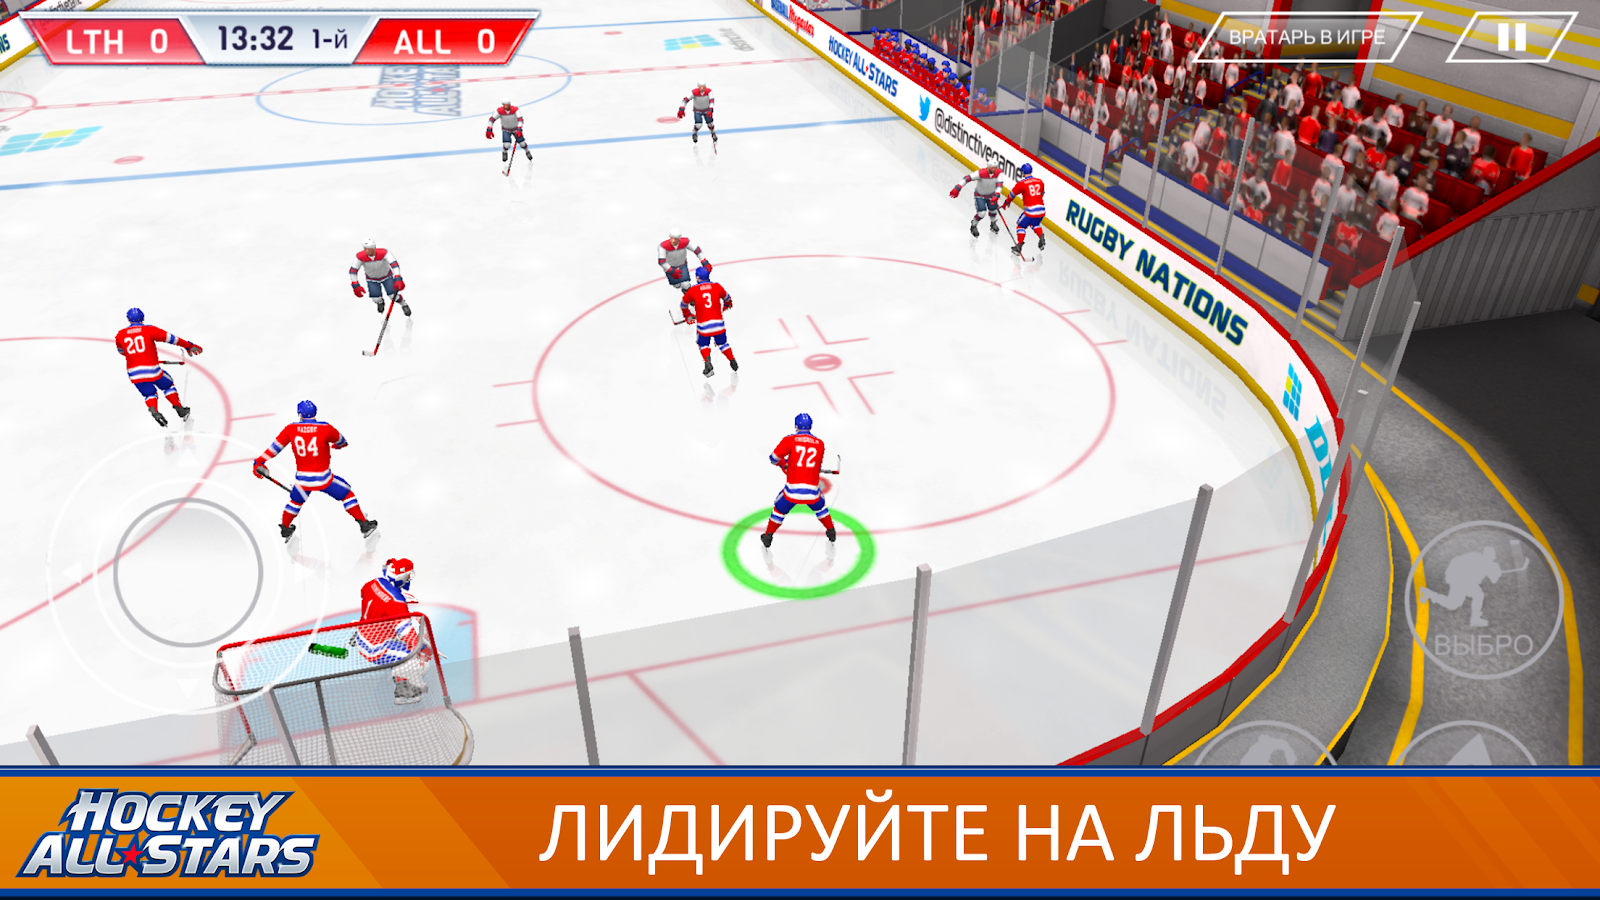 Скачать Hockey All Stars 1.7.1.542 Для Android